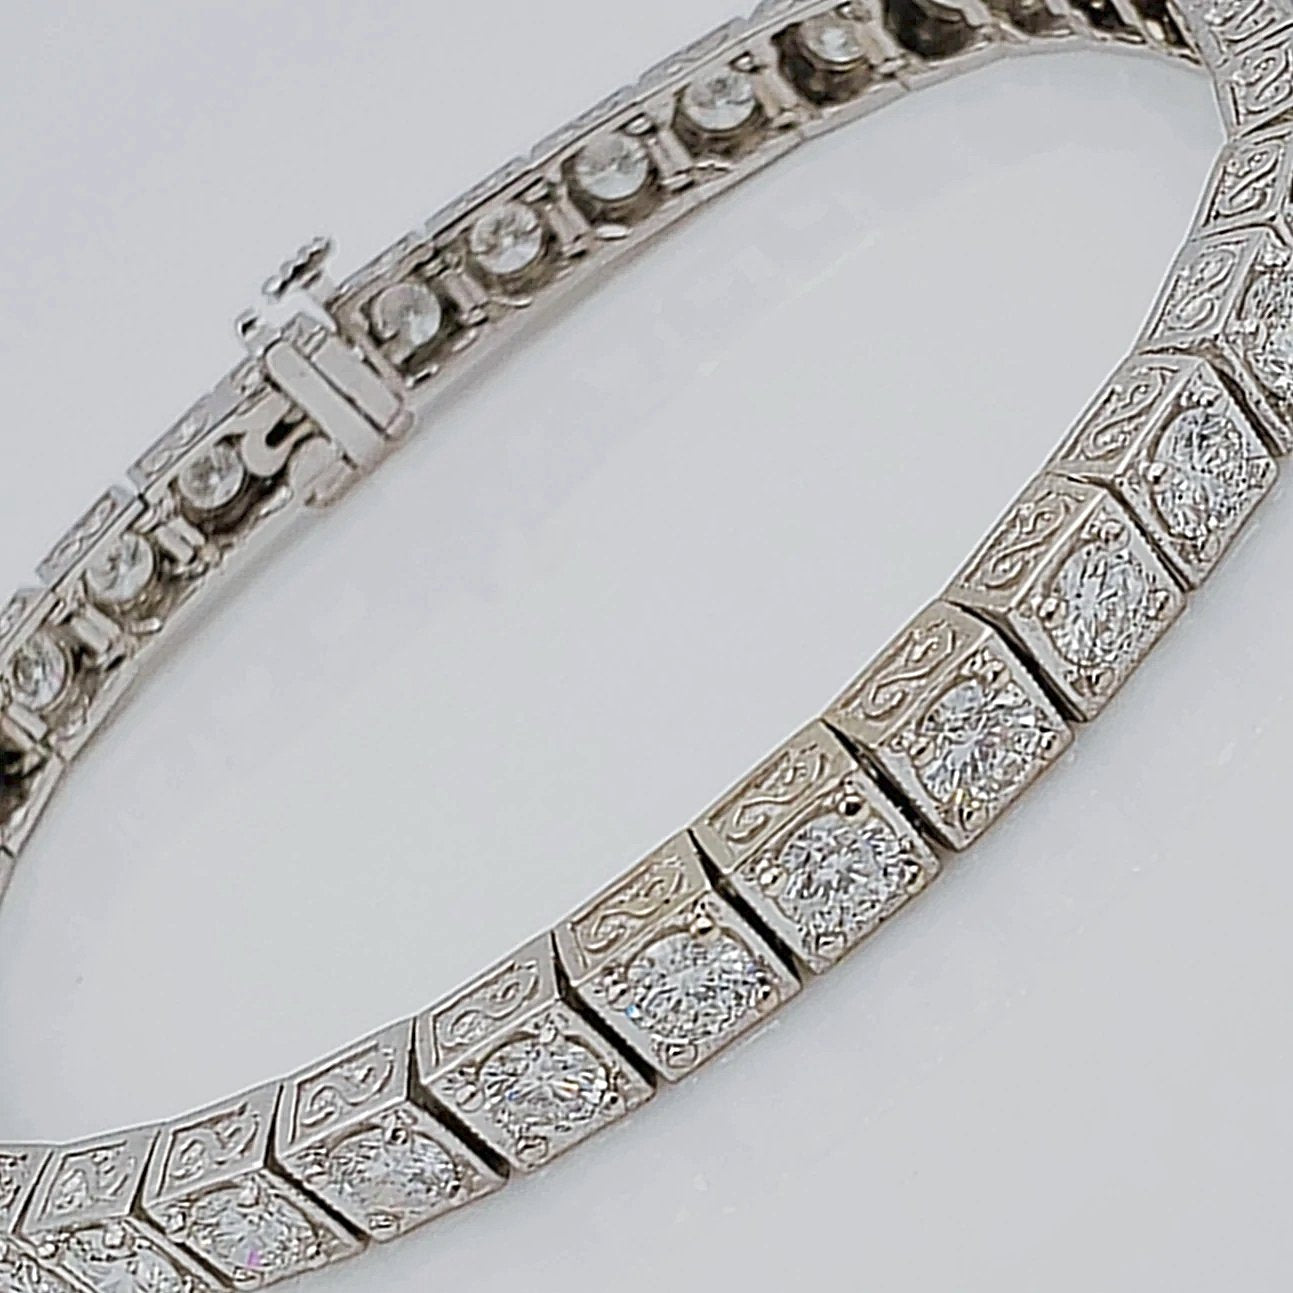 Women's 14K White Gold 6.80 Carat Total Weight (SI Color H) 21.1 GR Diamond Tennis Bracelet.